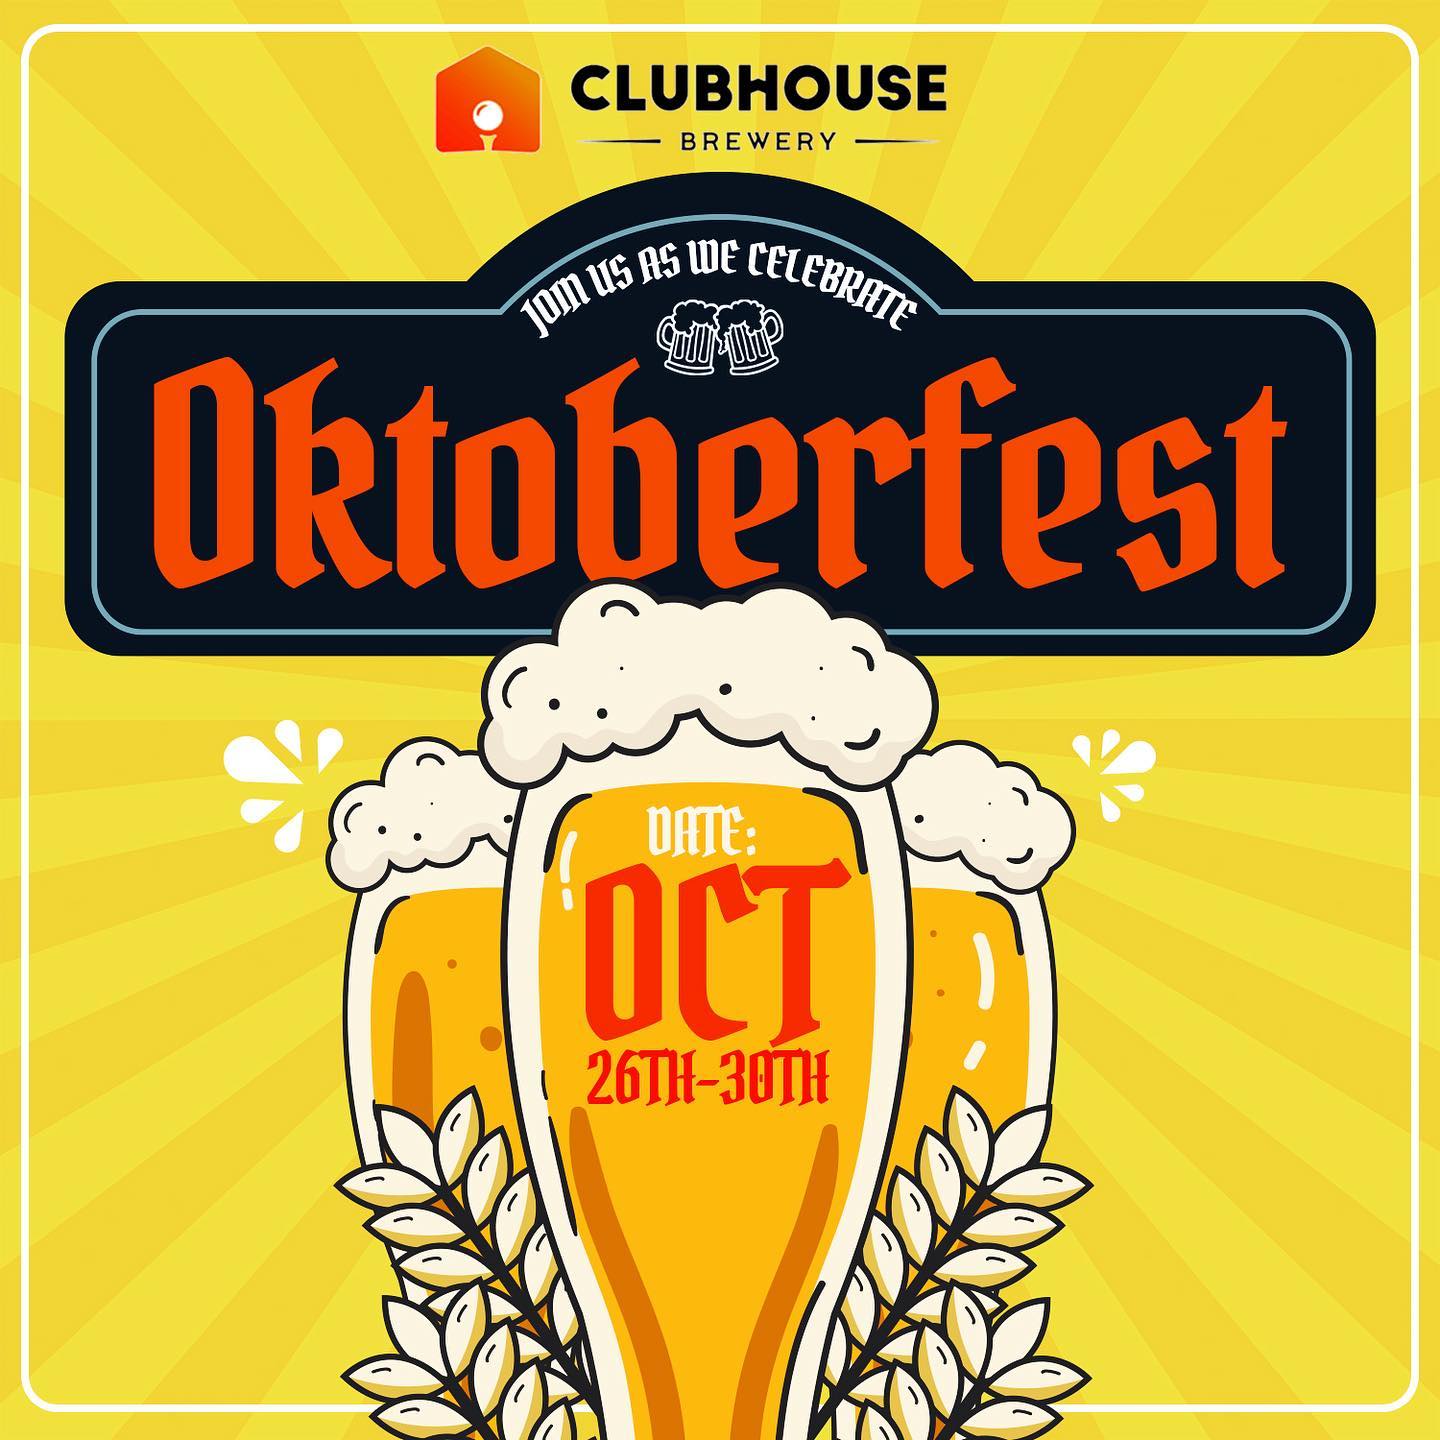 Clubhouse Brewery Oktoberfesr